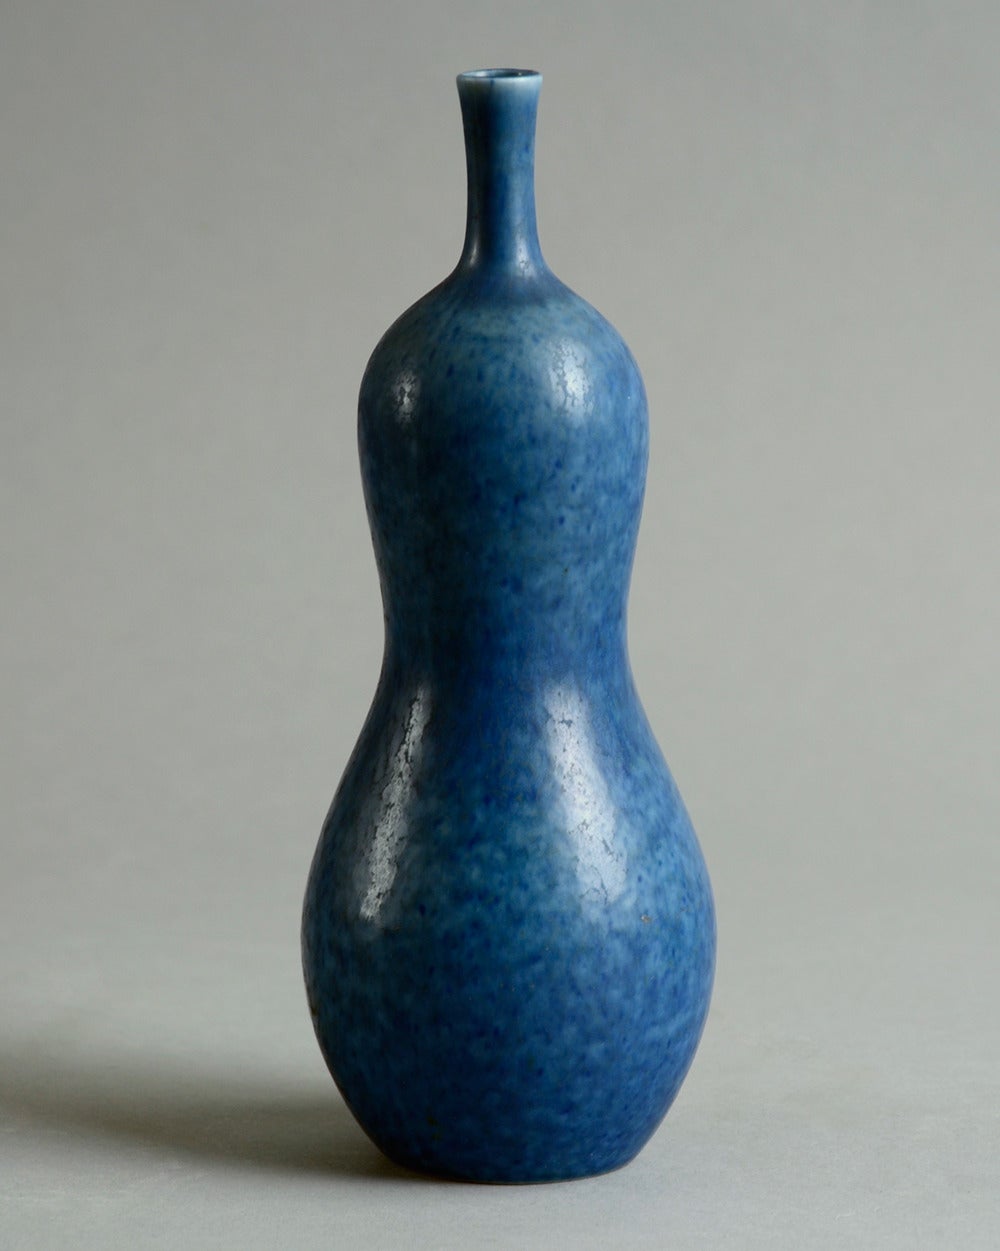 Stoneware vase with blue matte glaze, circa 1940s-1950s.